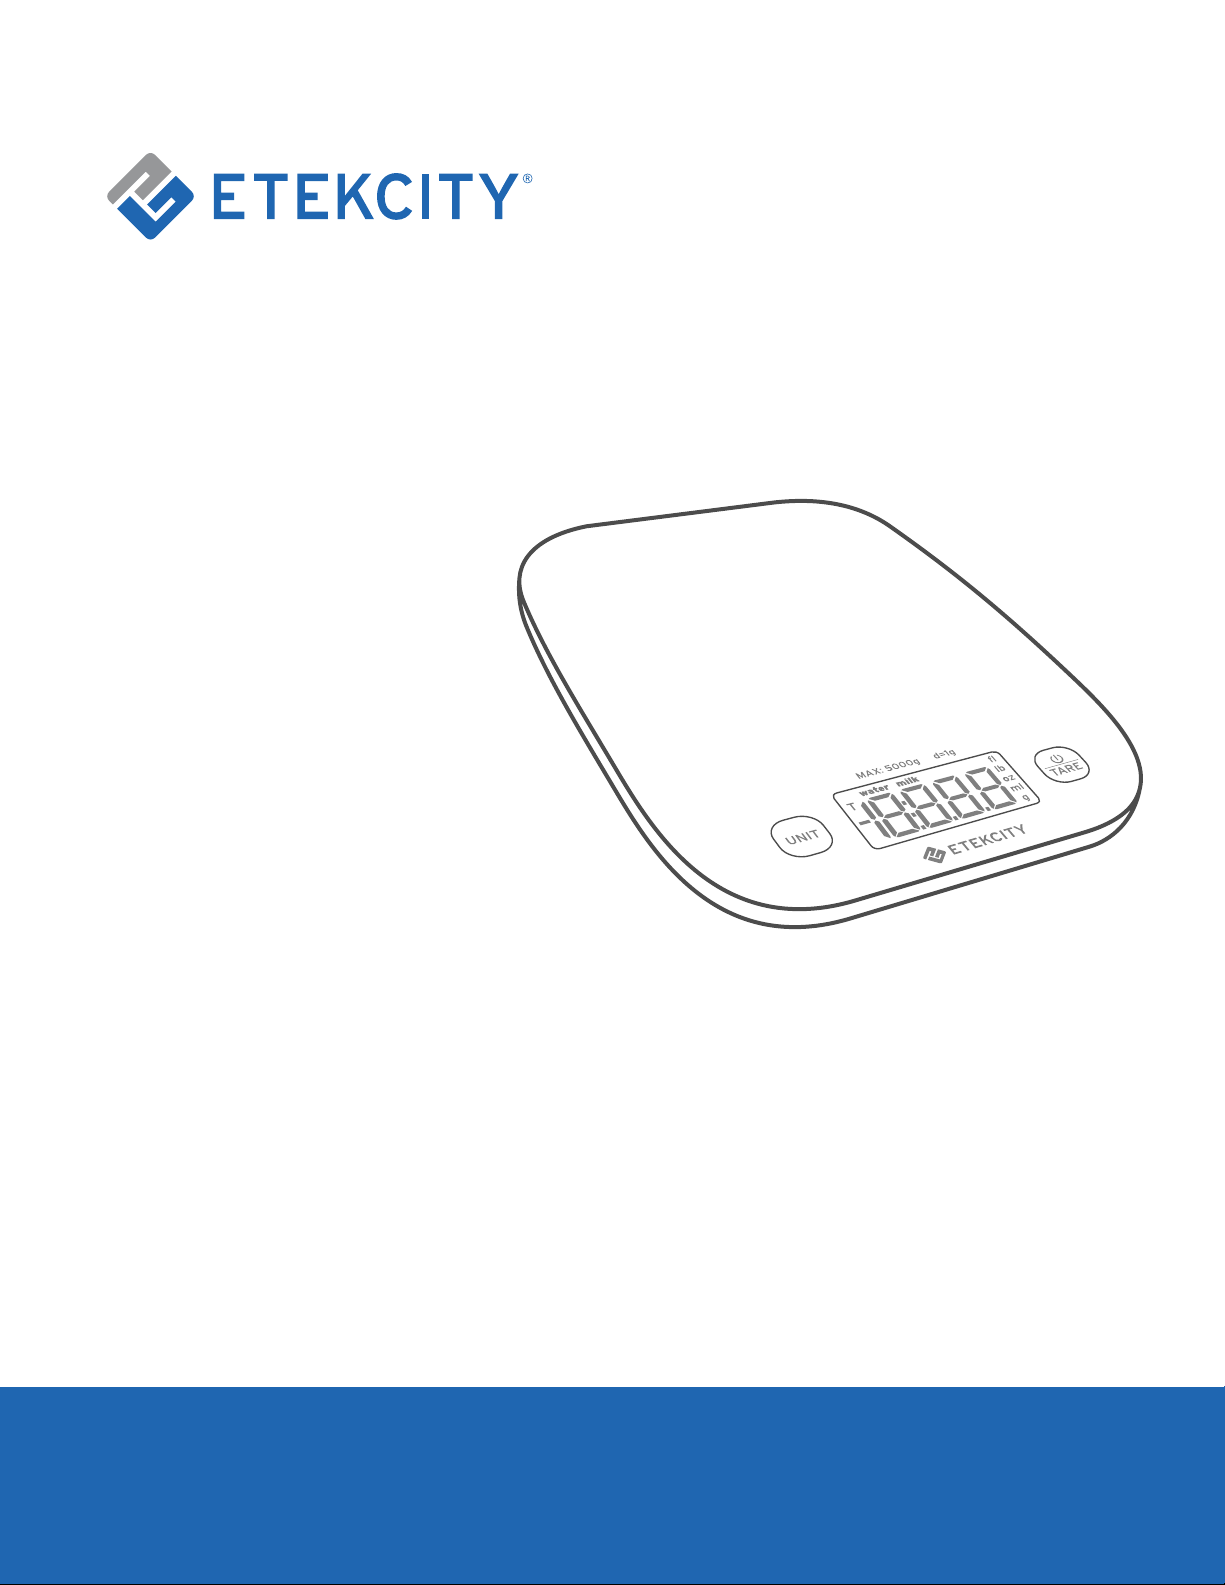 Etekcity EK7090 Digital Kitchen Scale